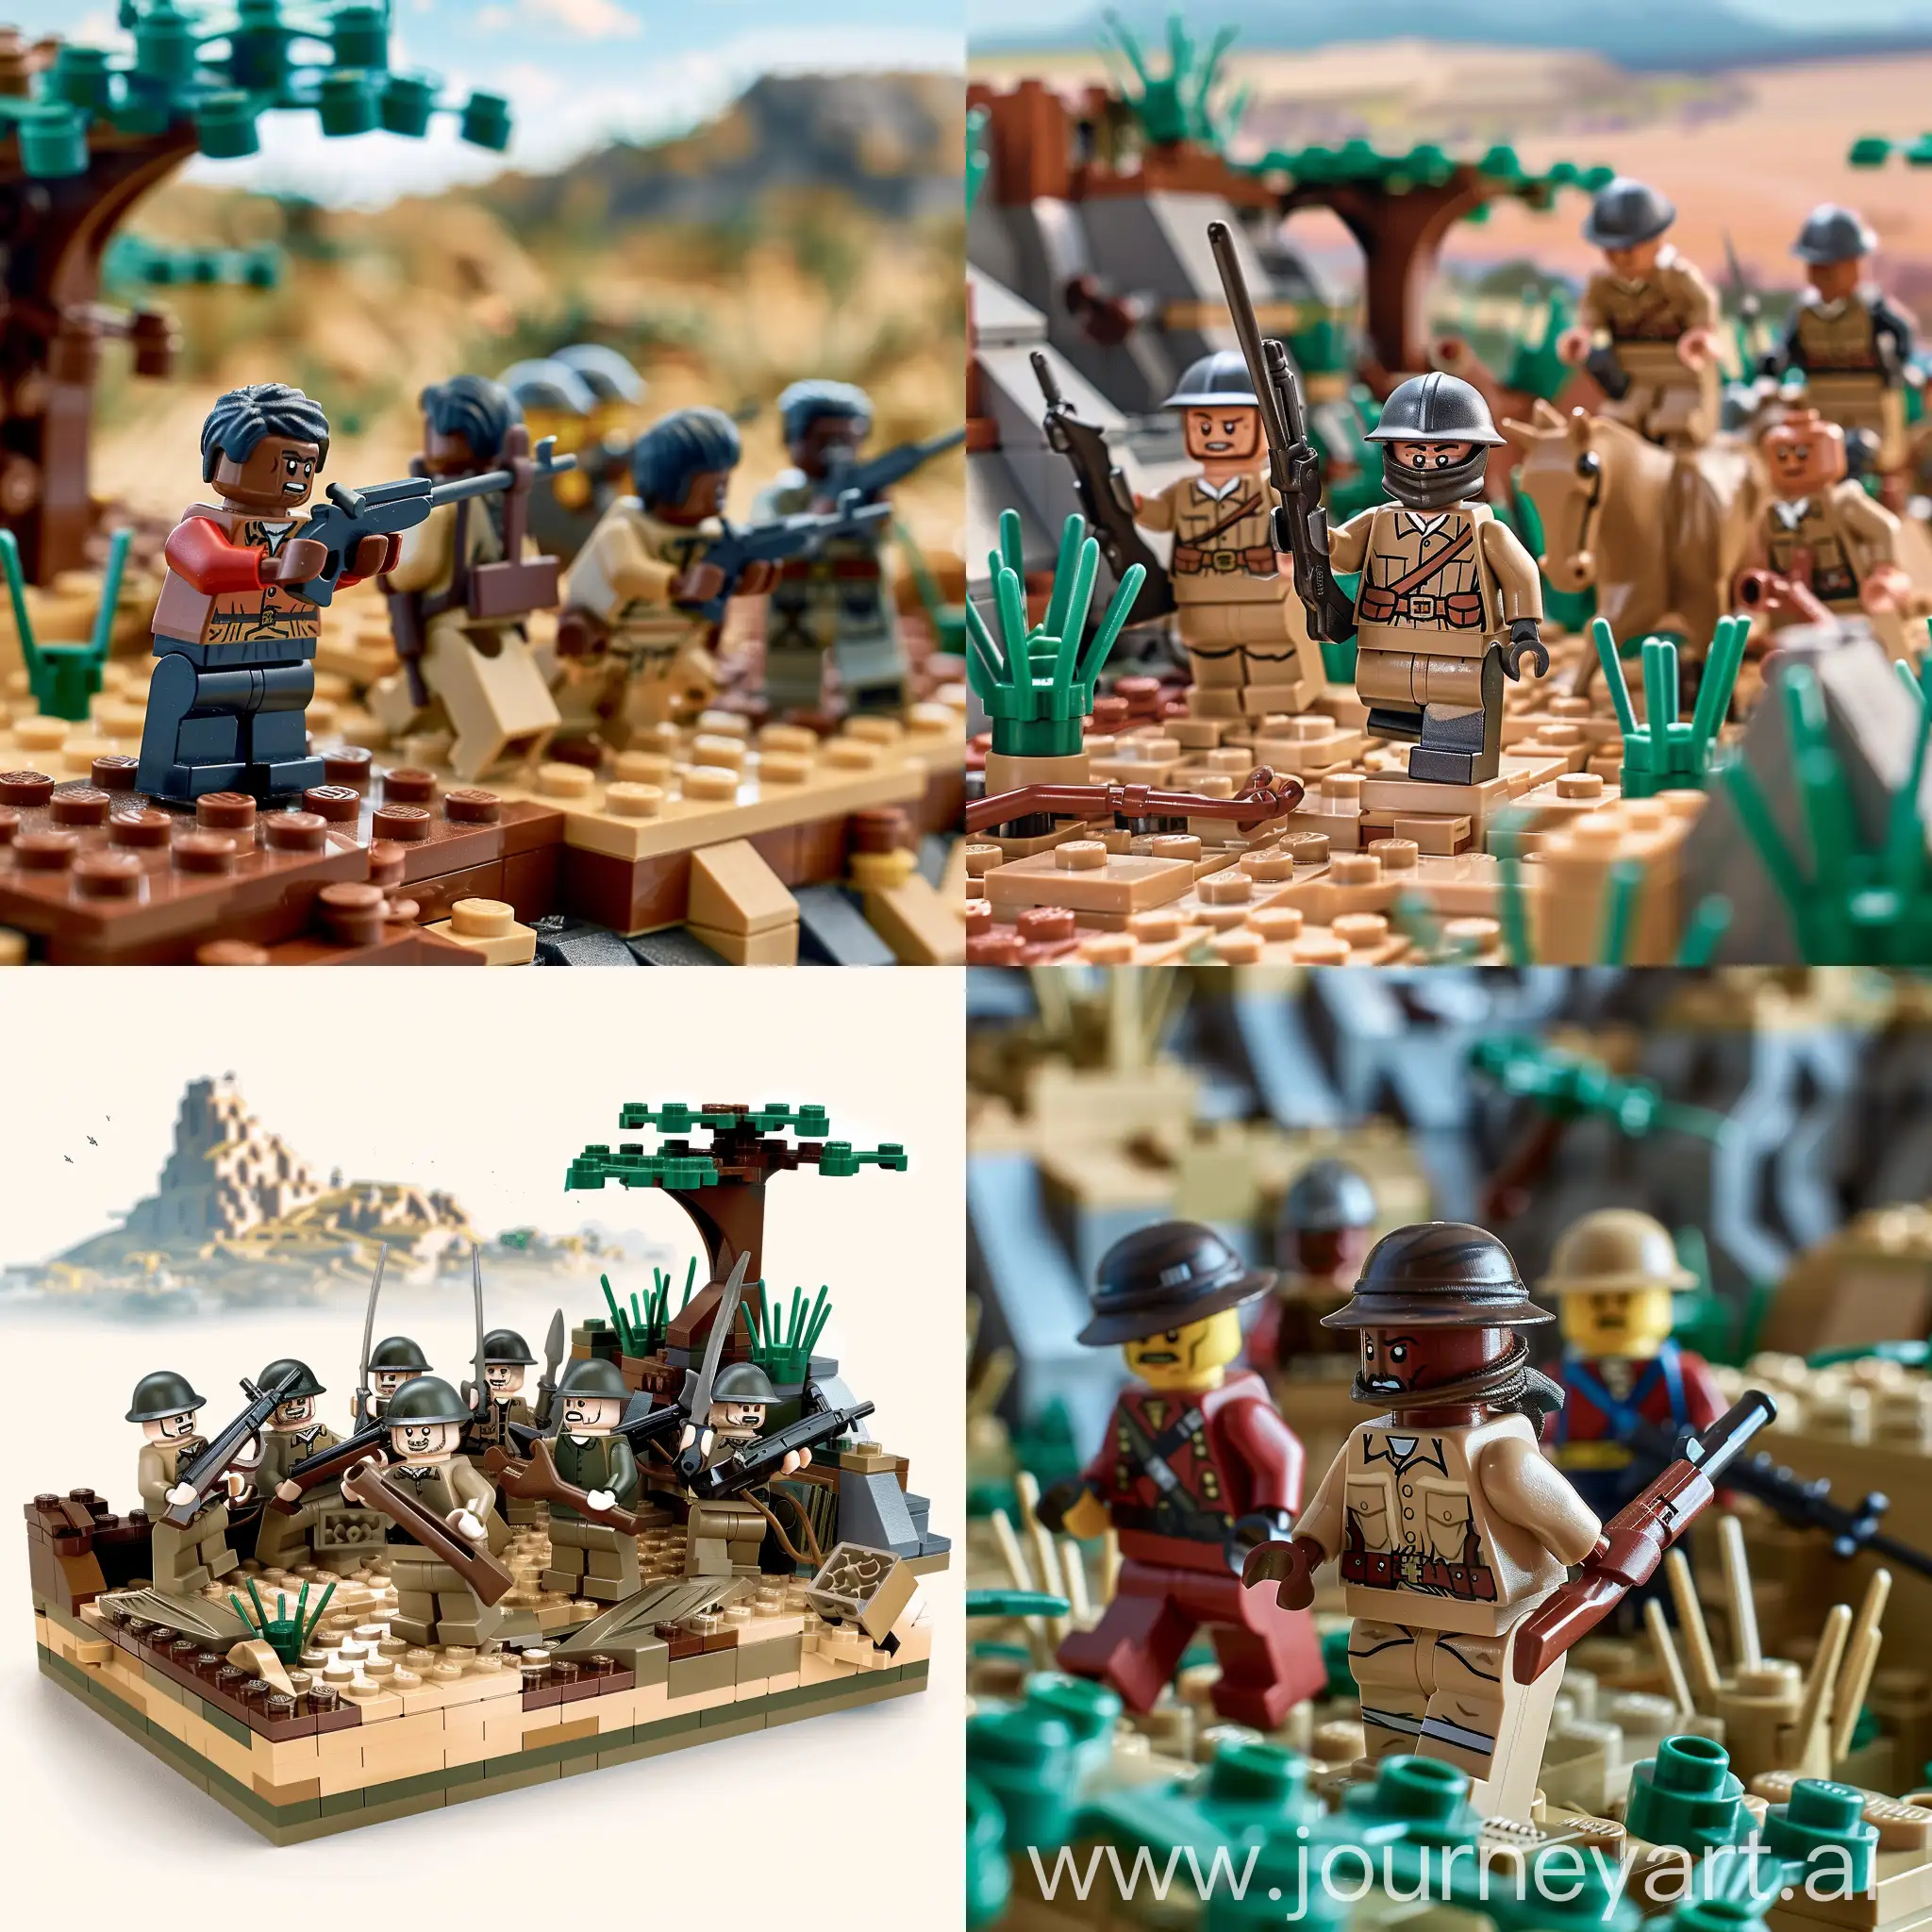 Lego-Battle-of-Isandlwana-Reconstruction-with-62090-Pieces